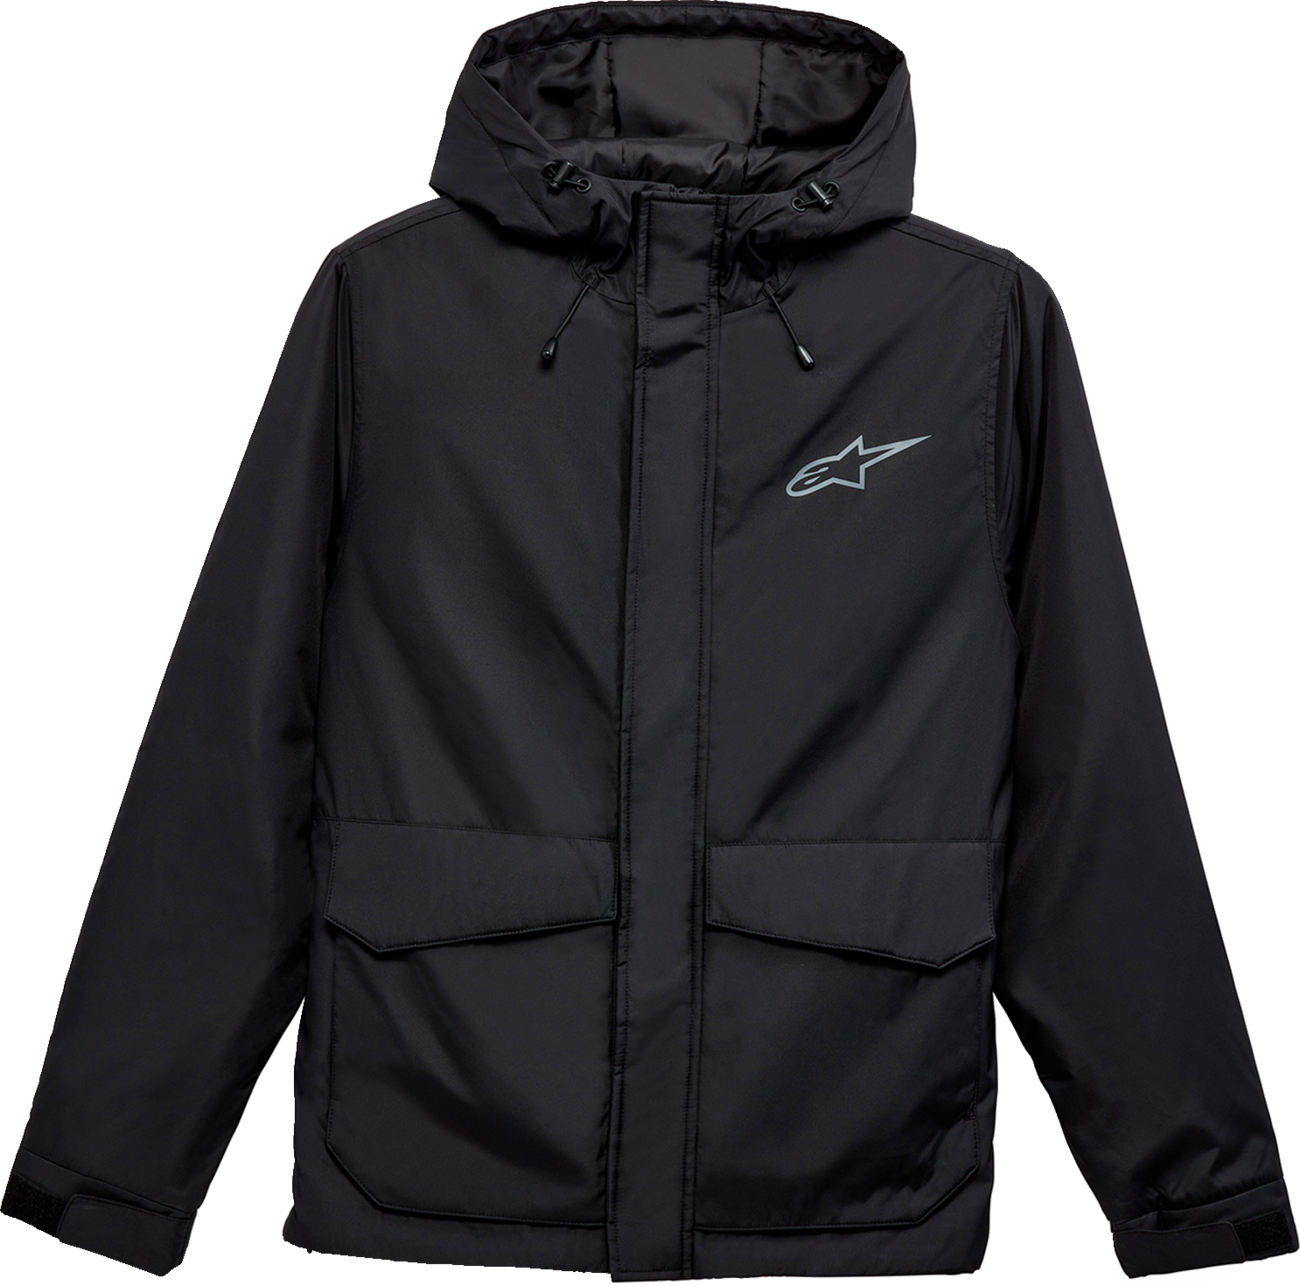 ALPINESTARS Fahrenheit Winter Jacket - Black - Medium 1232-11100-10-M